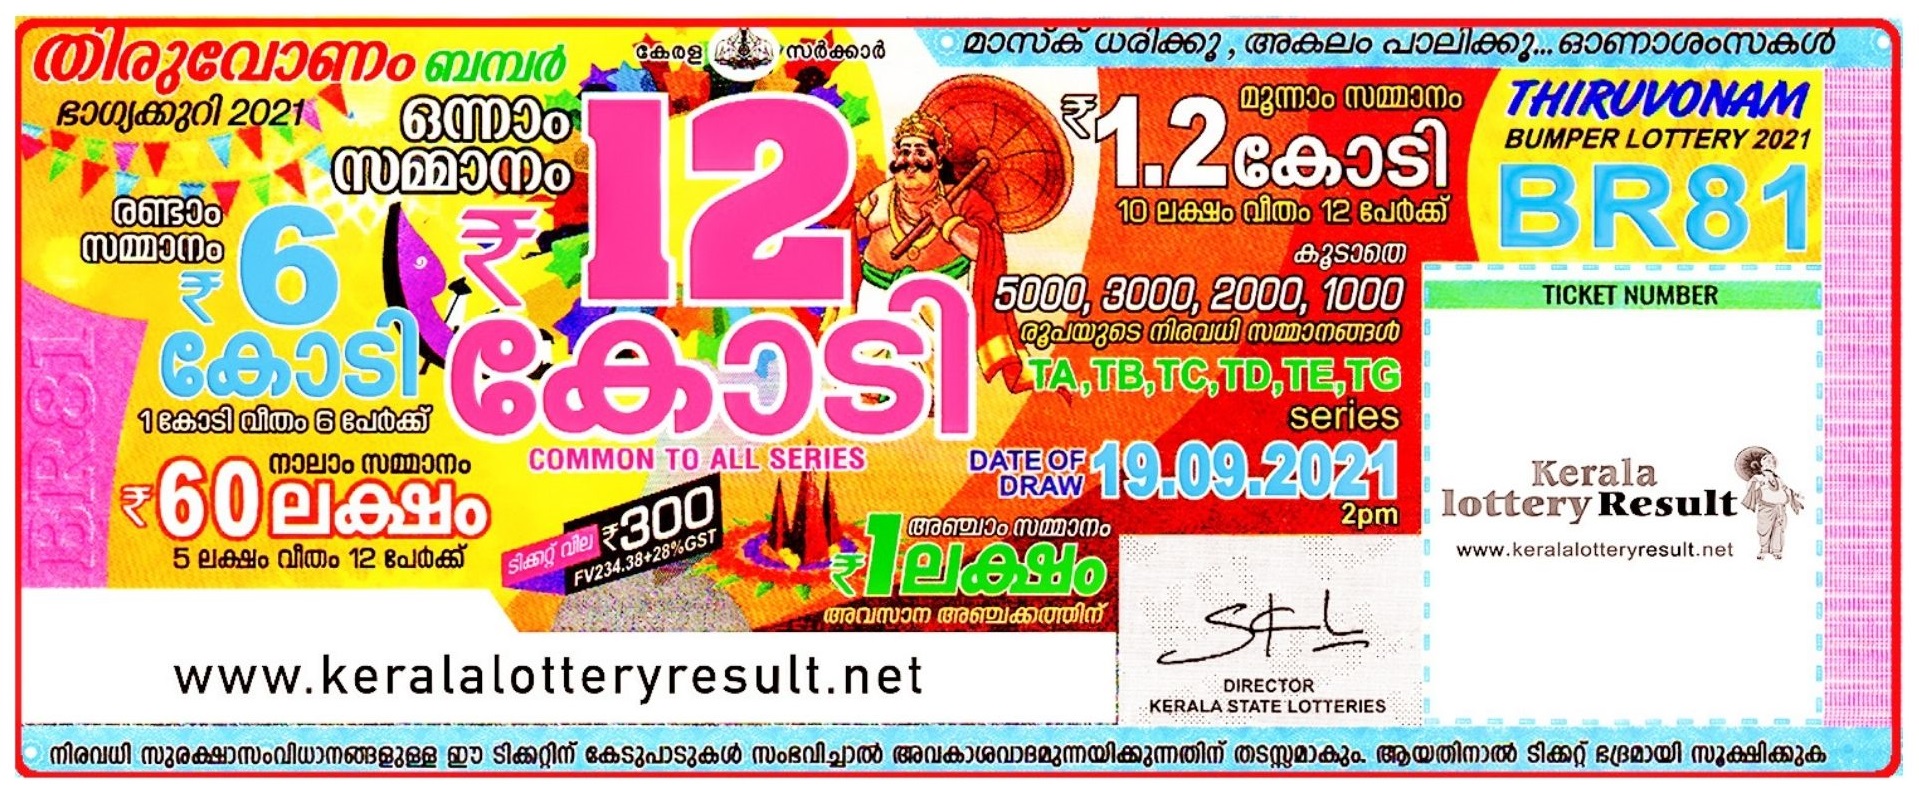 Kerala Onam Bumper Lottery 2021 Result BR 81 Today